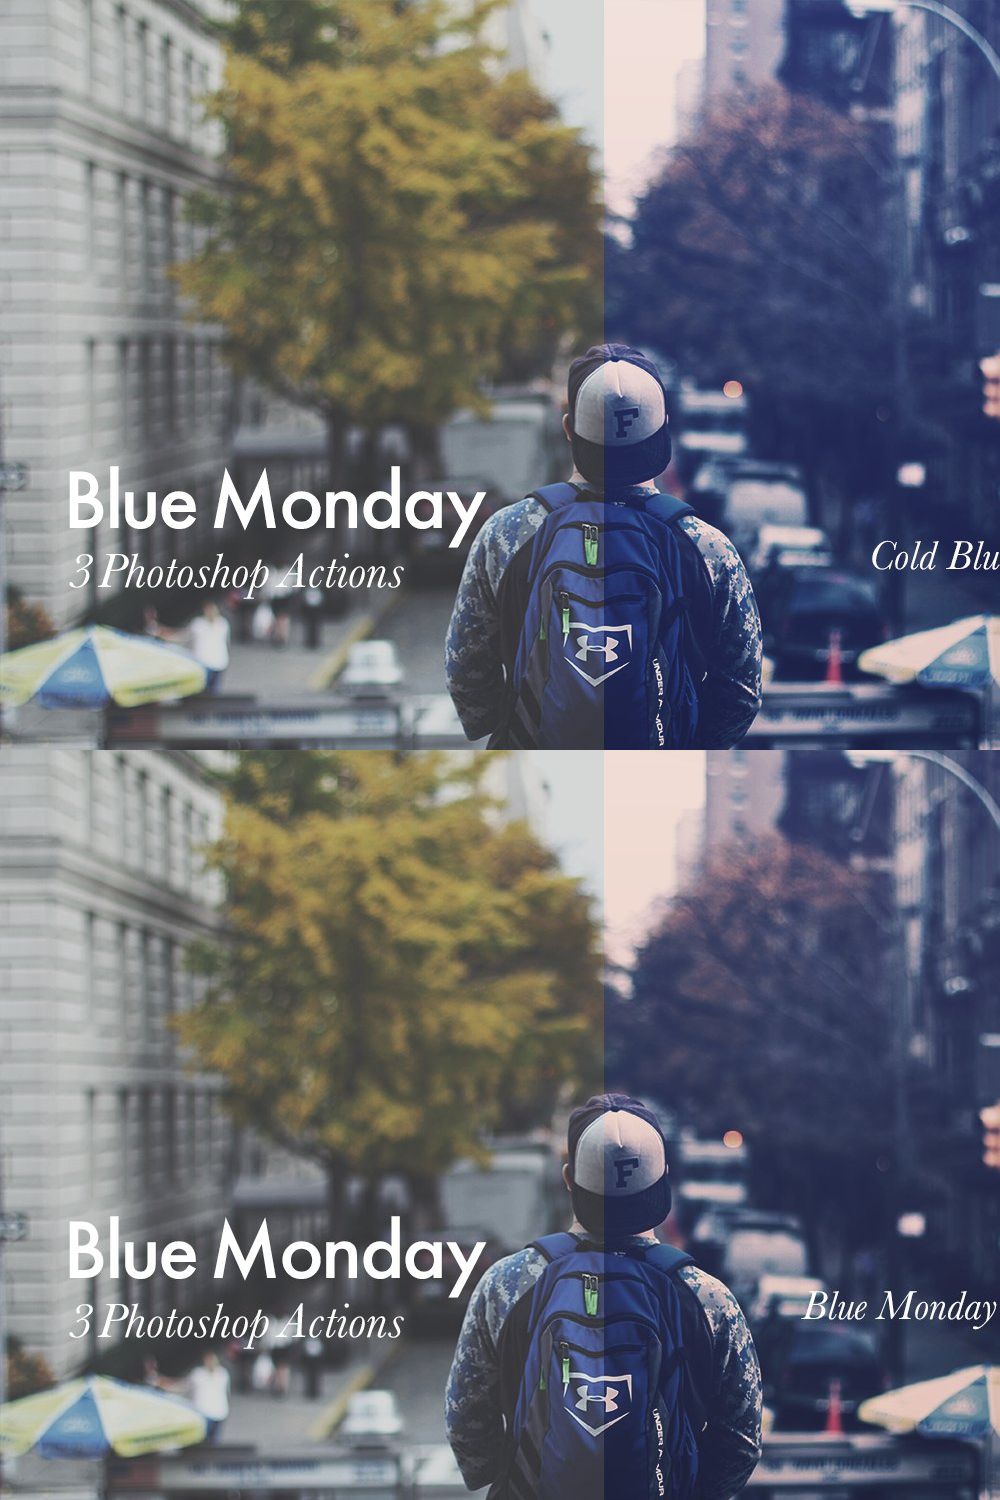 Blue Monday - 3 Photoshop Actions pinterest preview image.